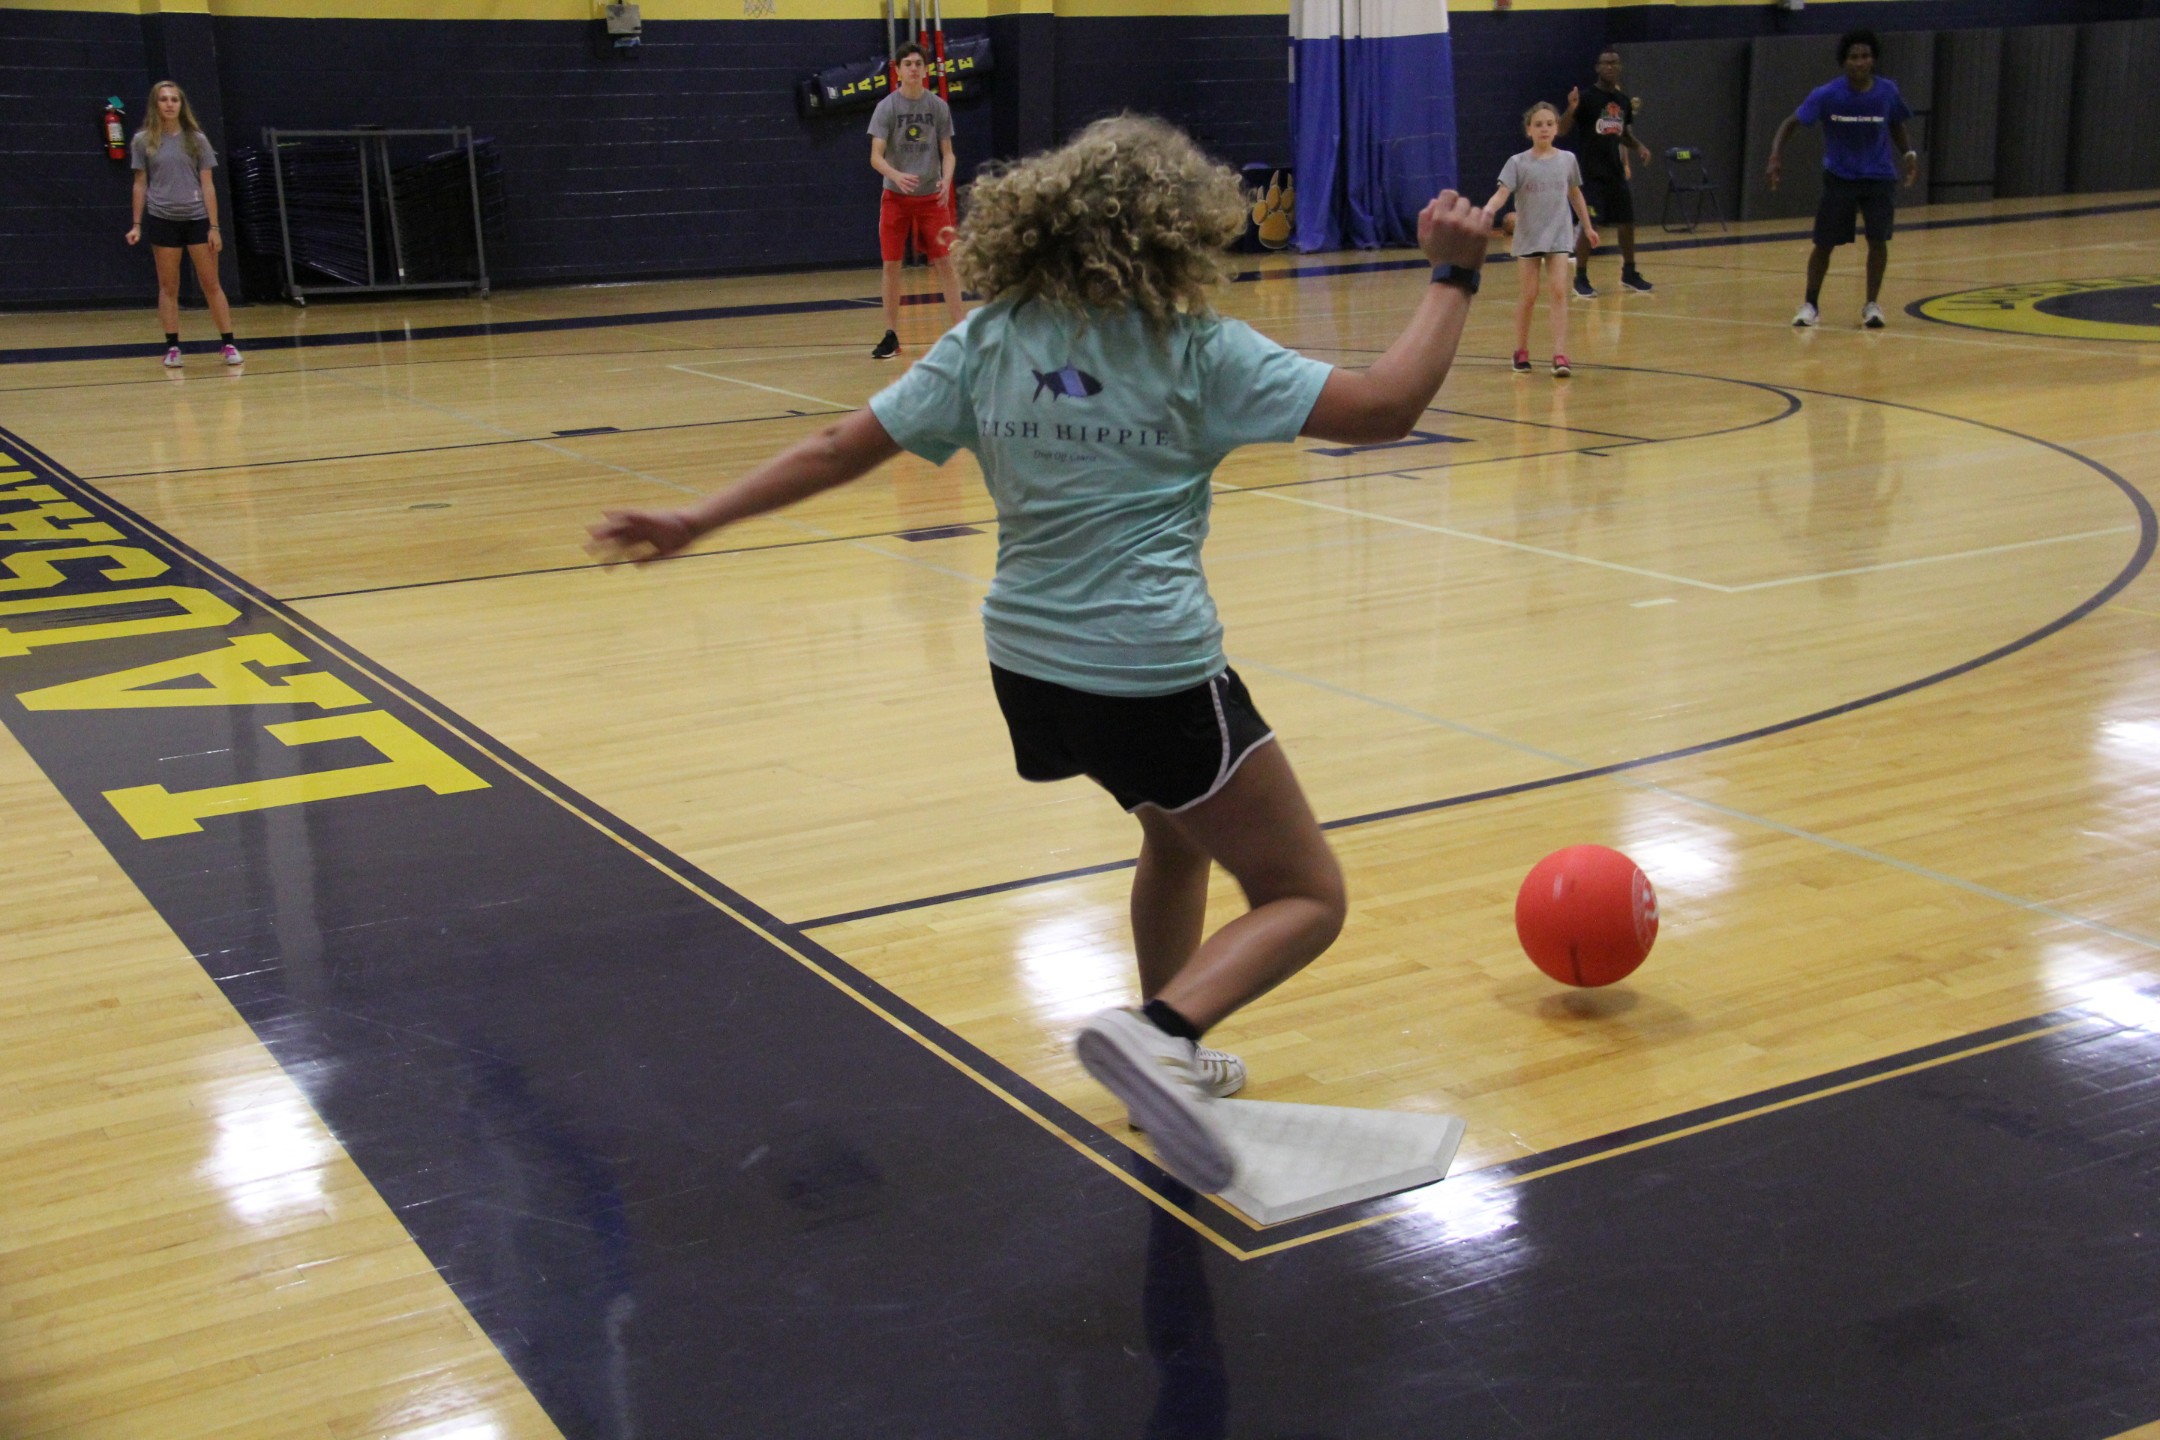 Student kicking ball in kickball game